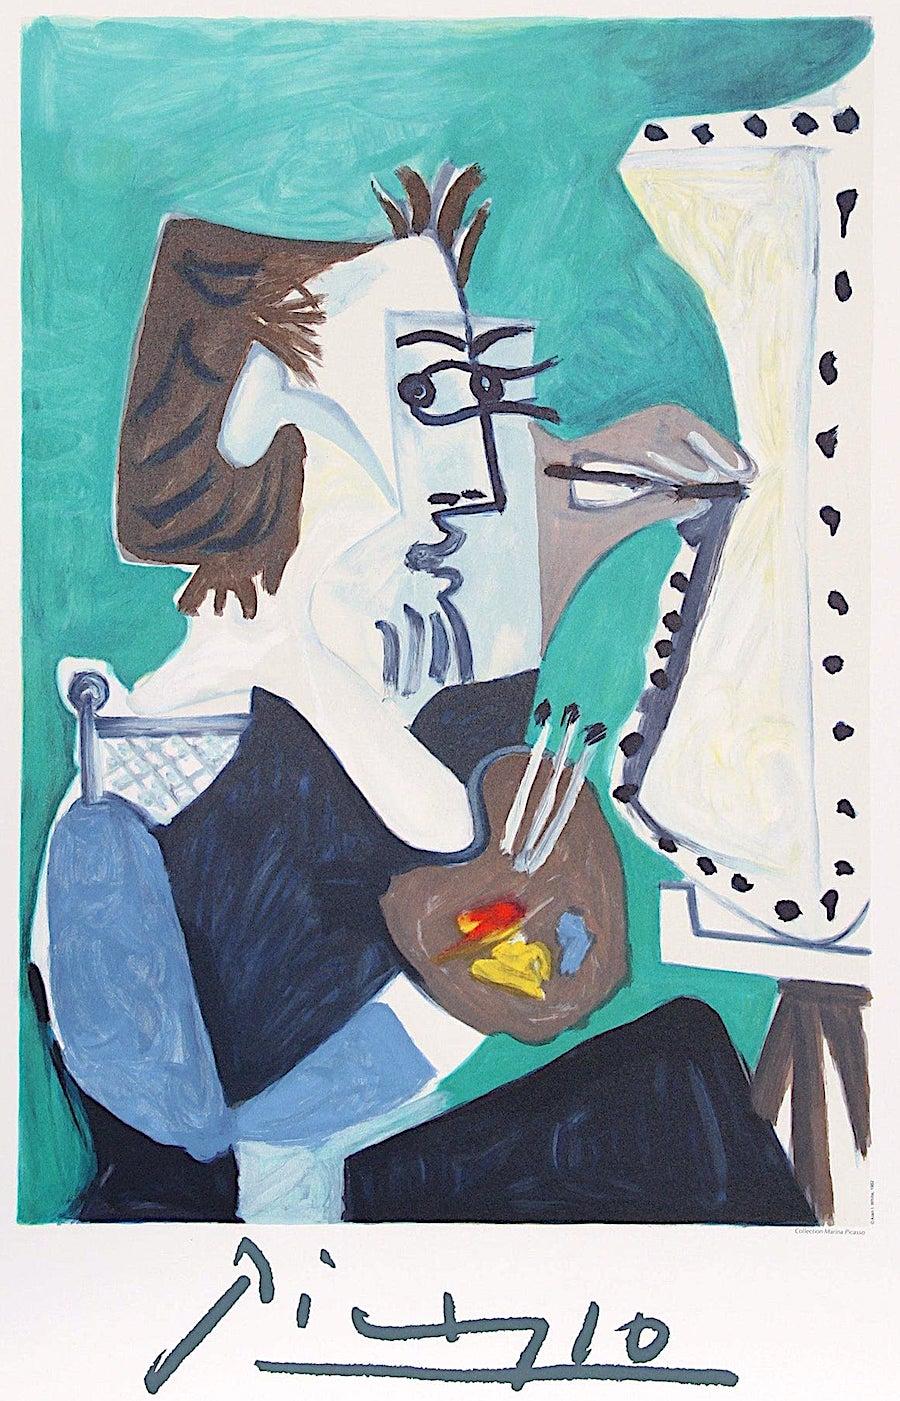 LE PEINTRE Lithograph, Artist Portrait, Painter at his Easel, Cool Green, Blue - Print by (after) Pablo Picasso